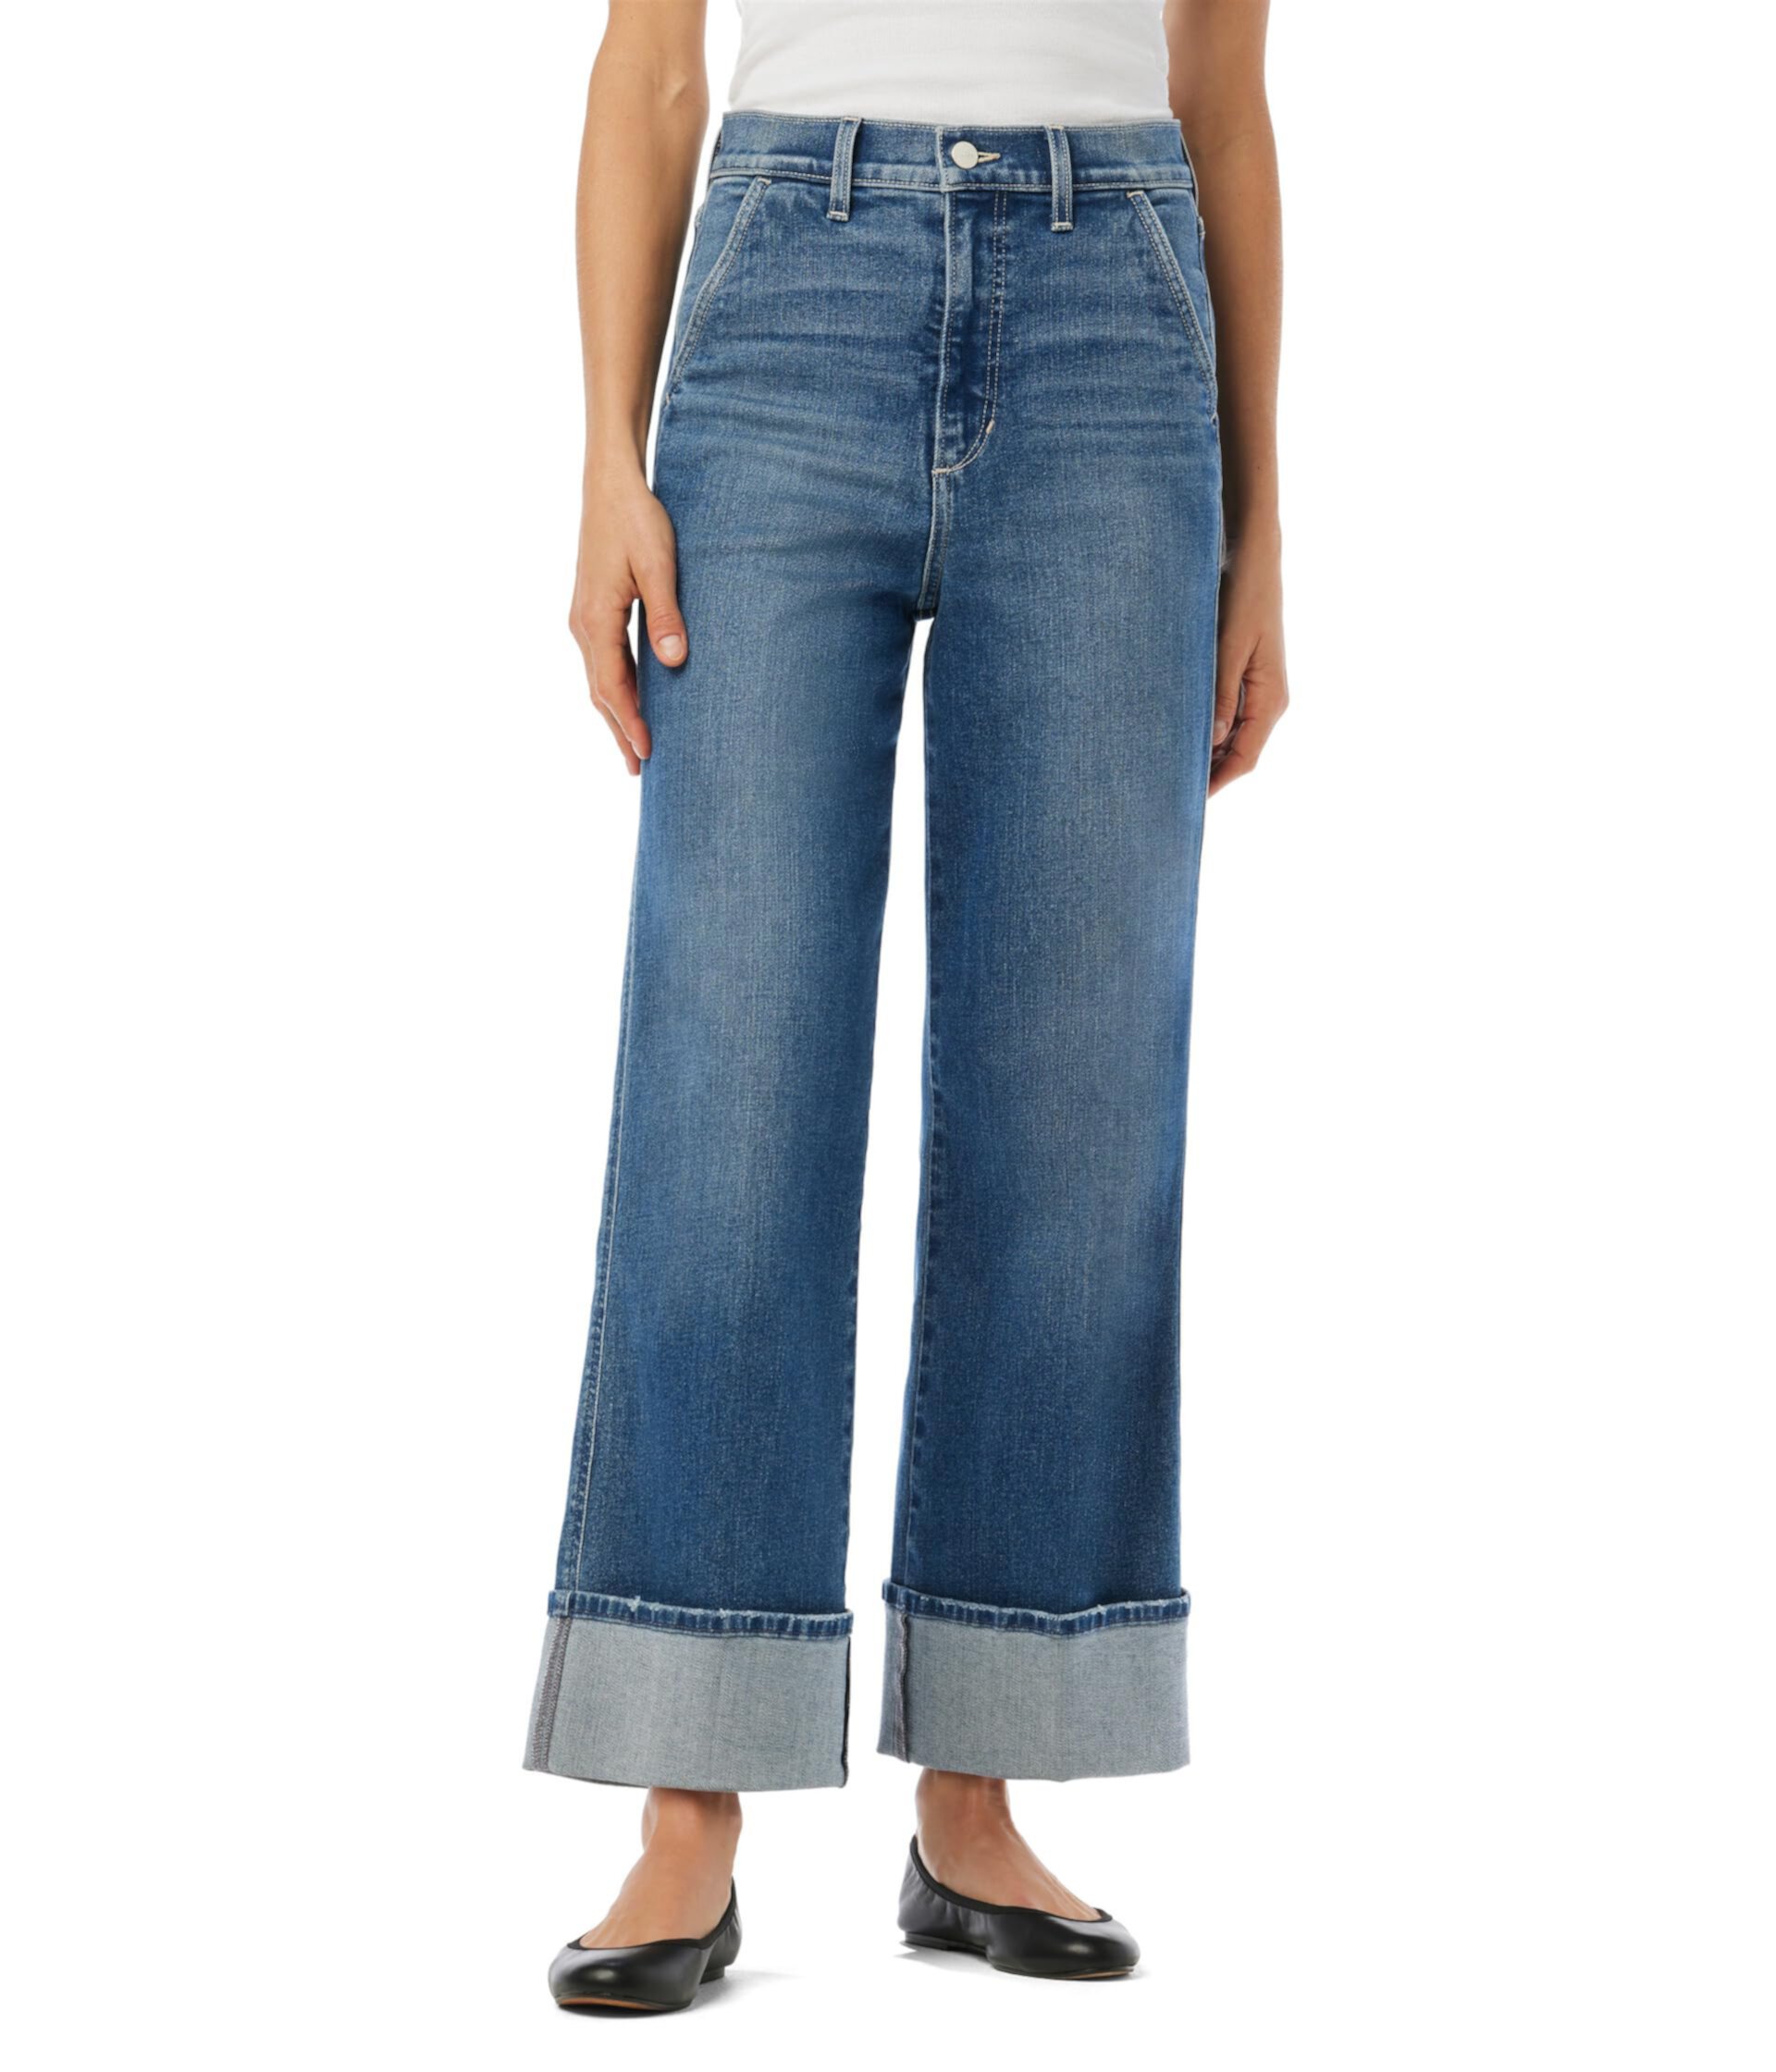 Джинсы Trixie с широкими манжетами Joe's Jeans